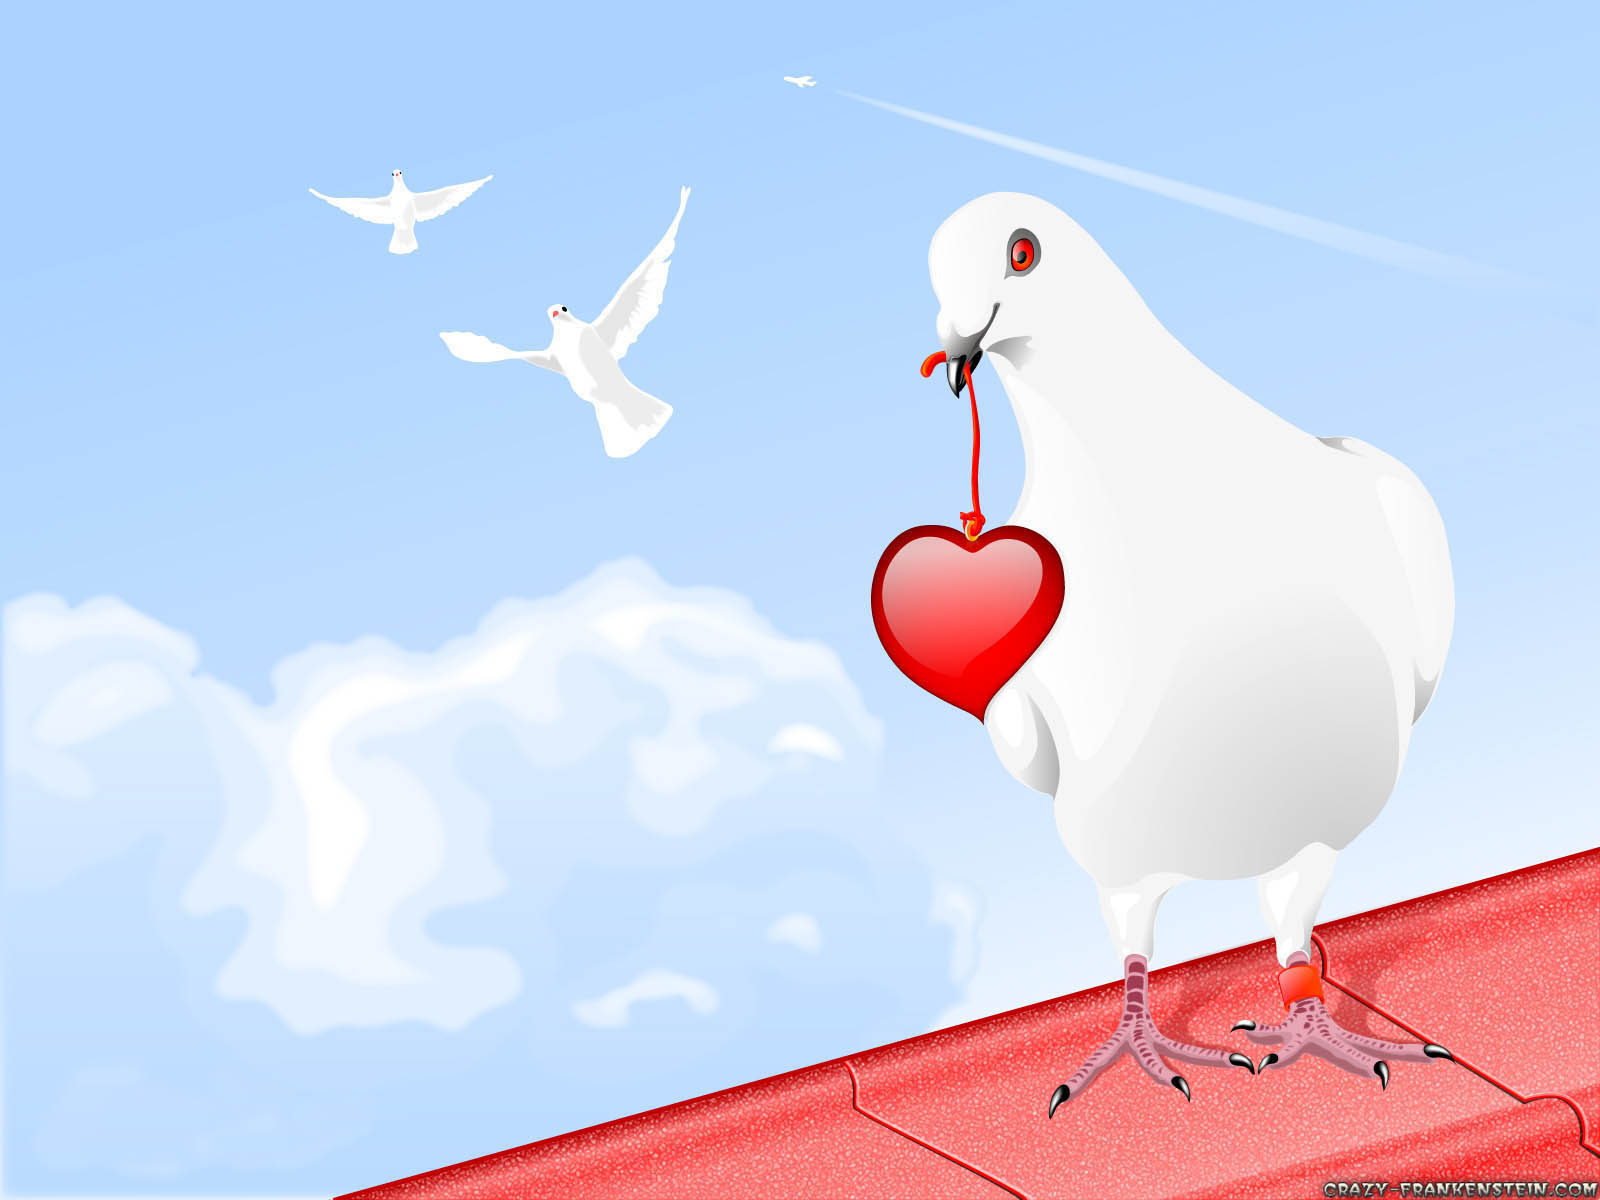 https://blogger.googleusercontent.com/img/b/R29vZ2xl/AVvXsEiqayNA_Fr6x0S1F6iA88kc57YYMGP2p7RX7_rT6uSOrTMlyTE6R7PYK7msBlHHnumq7hOZKANNegmI7WJwkviHEoEAZCmKXDqiJIIdvirGlgrLcOqIb00Cm69hznBz4wCxwltim69lnlcb/s1600/white-pigeon-red-heart-1600x1200-love-wallpapers.jpg